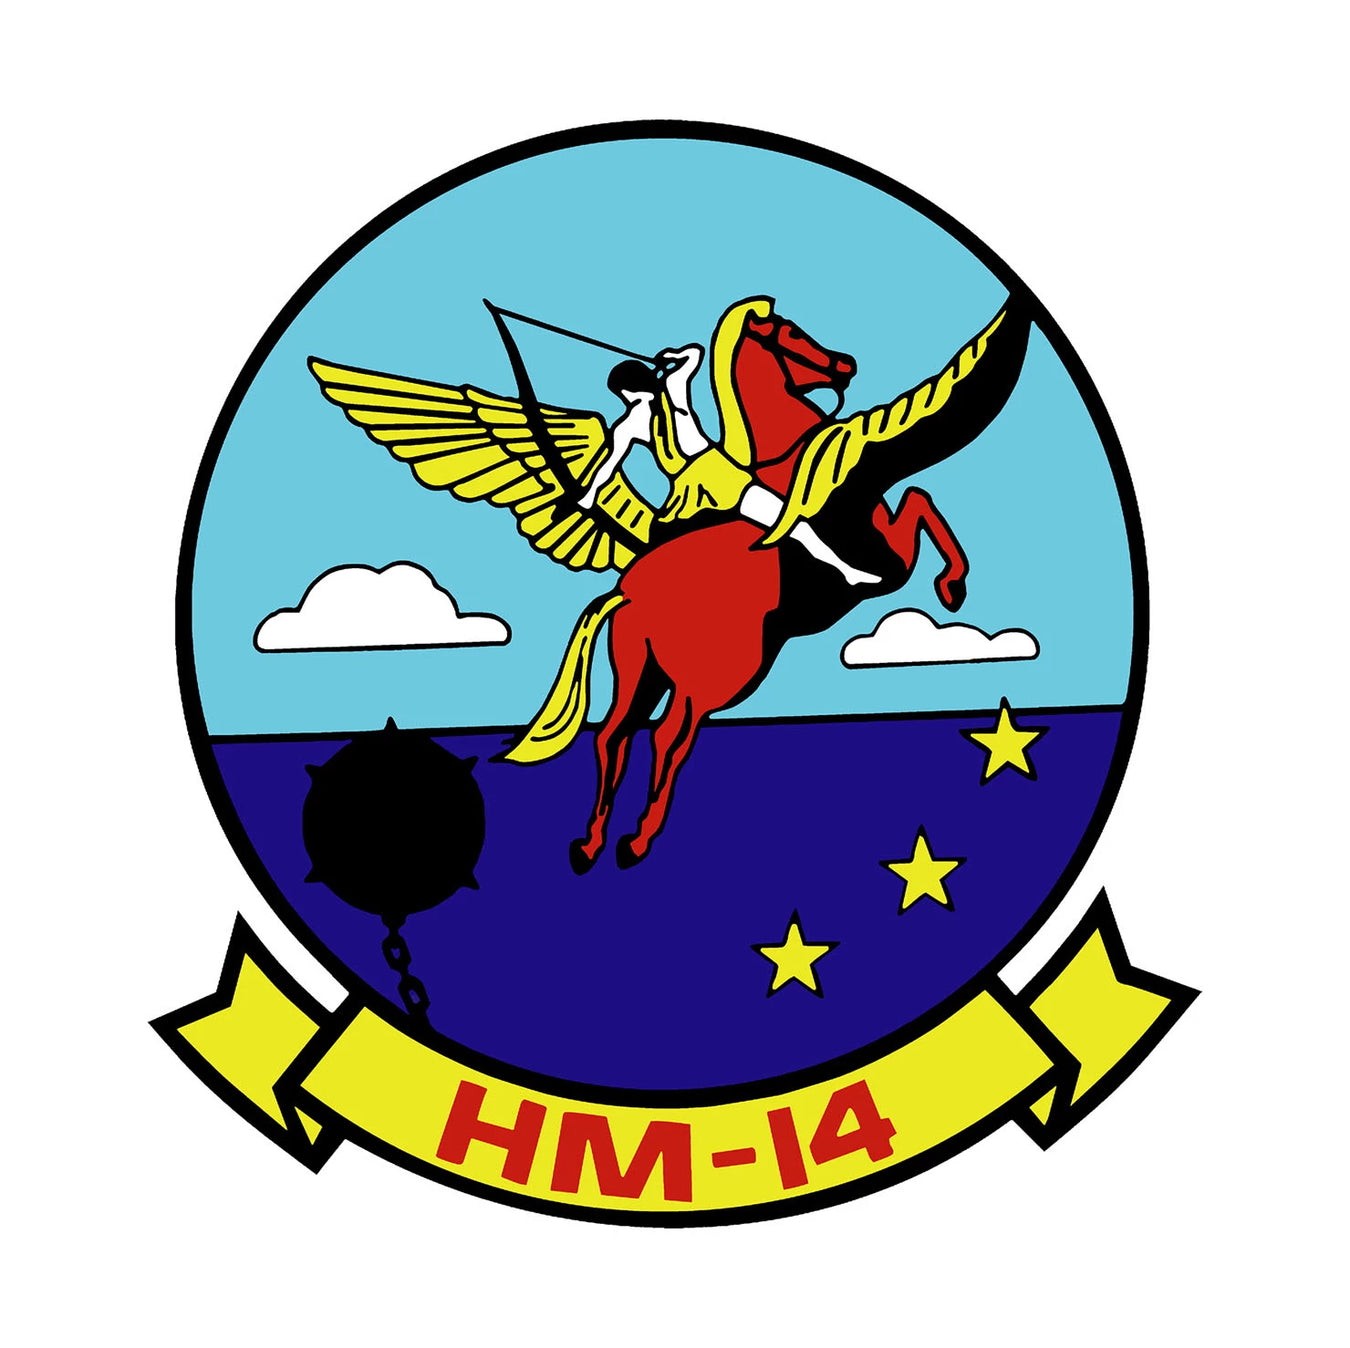 Helicopter Mine Countermeasures Squadron 14 (HM-14)